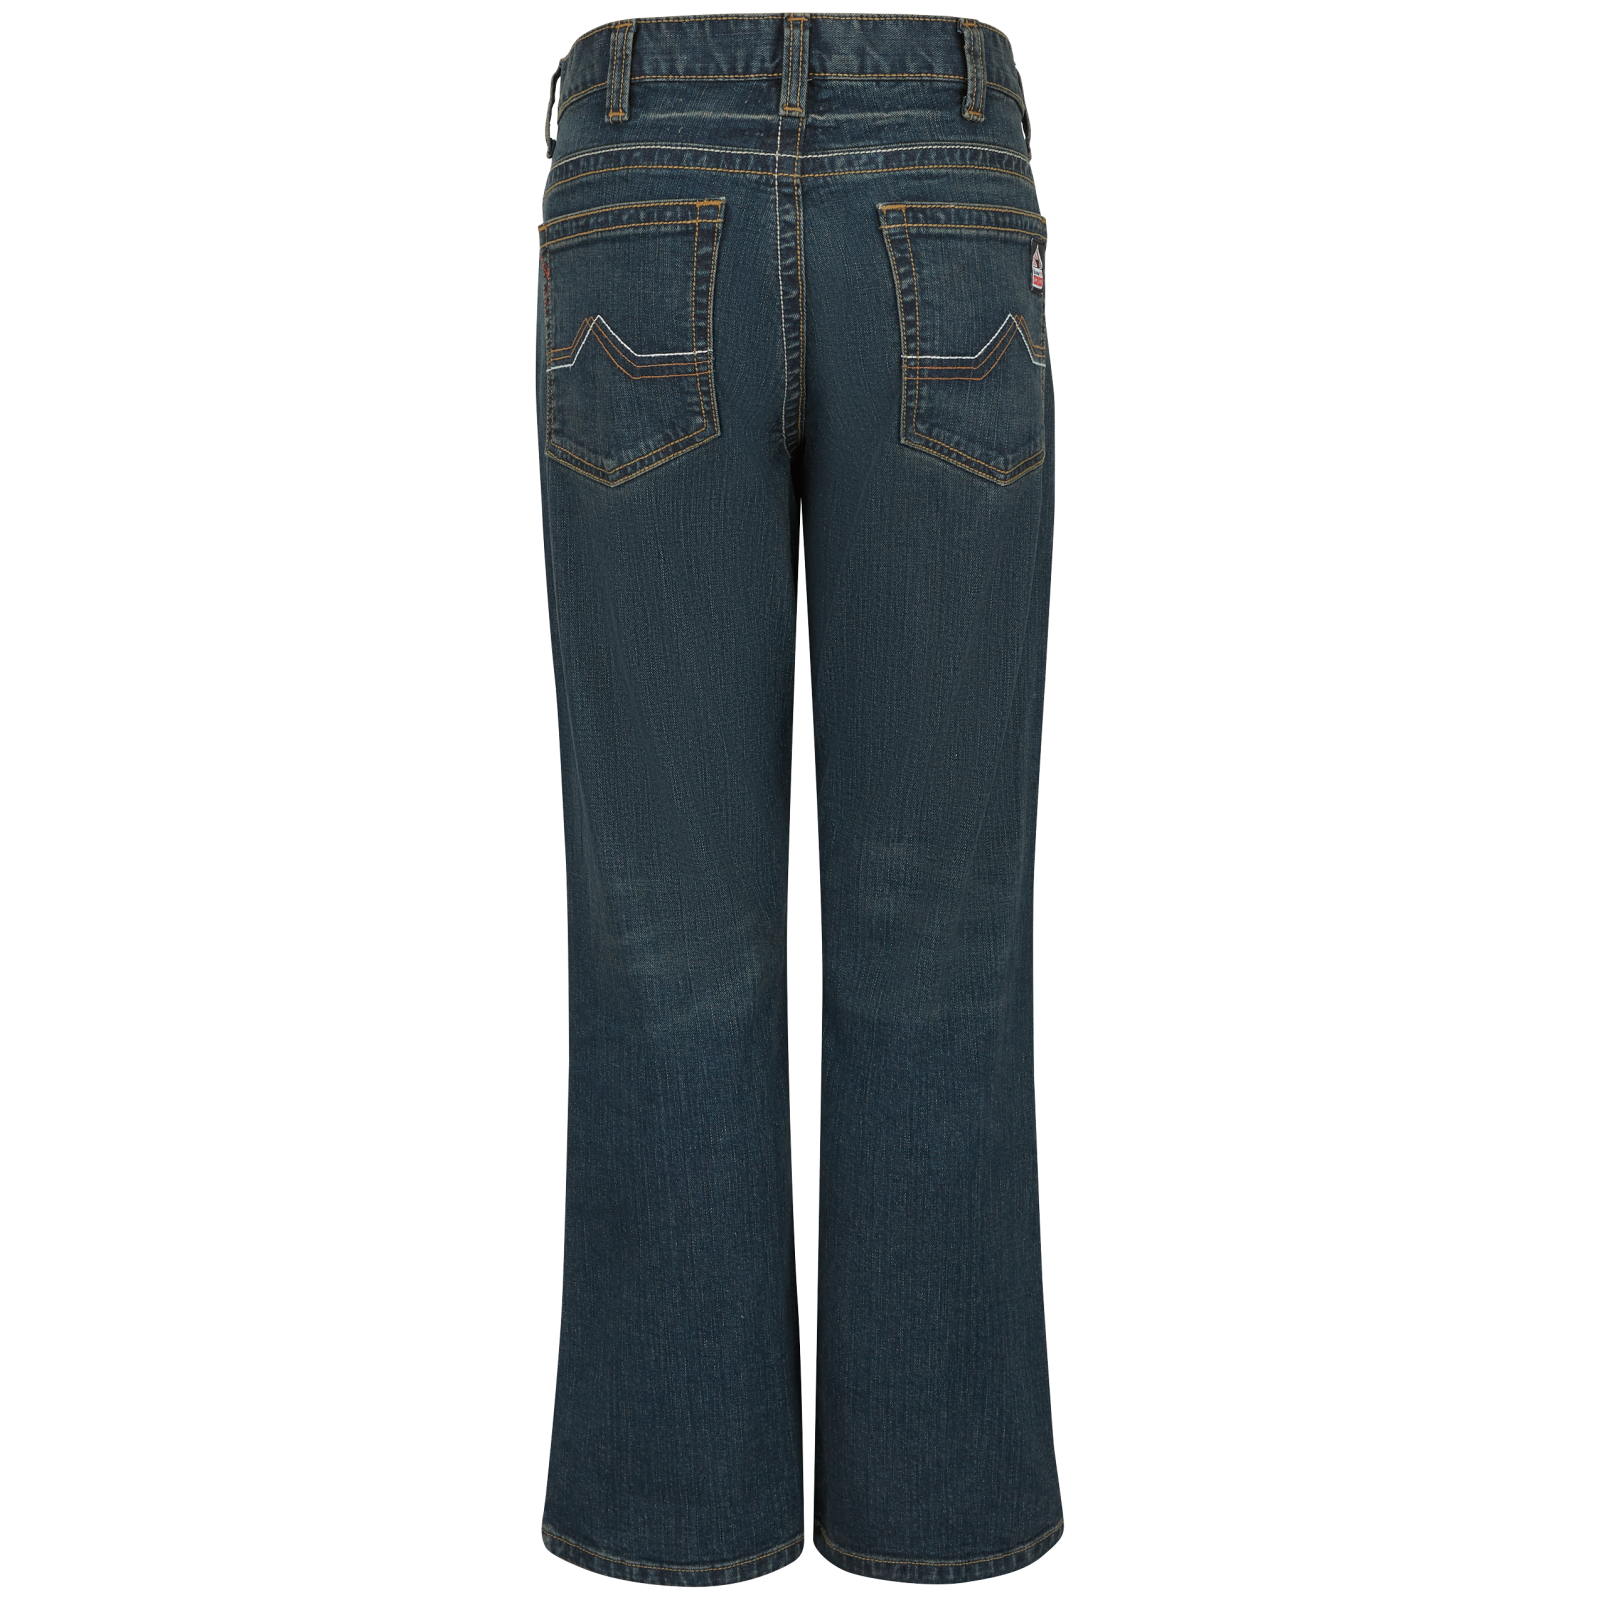 best mens bootcut jeans 2018